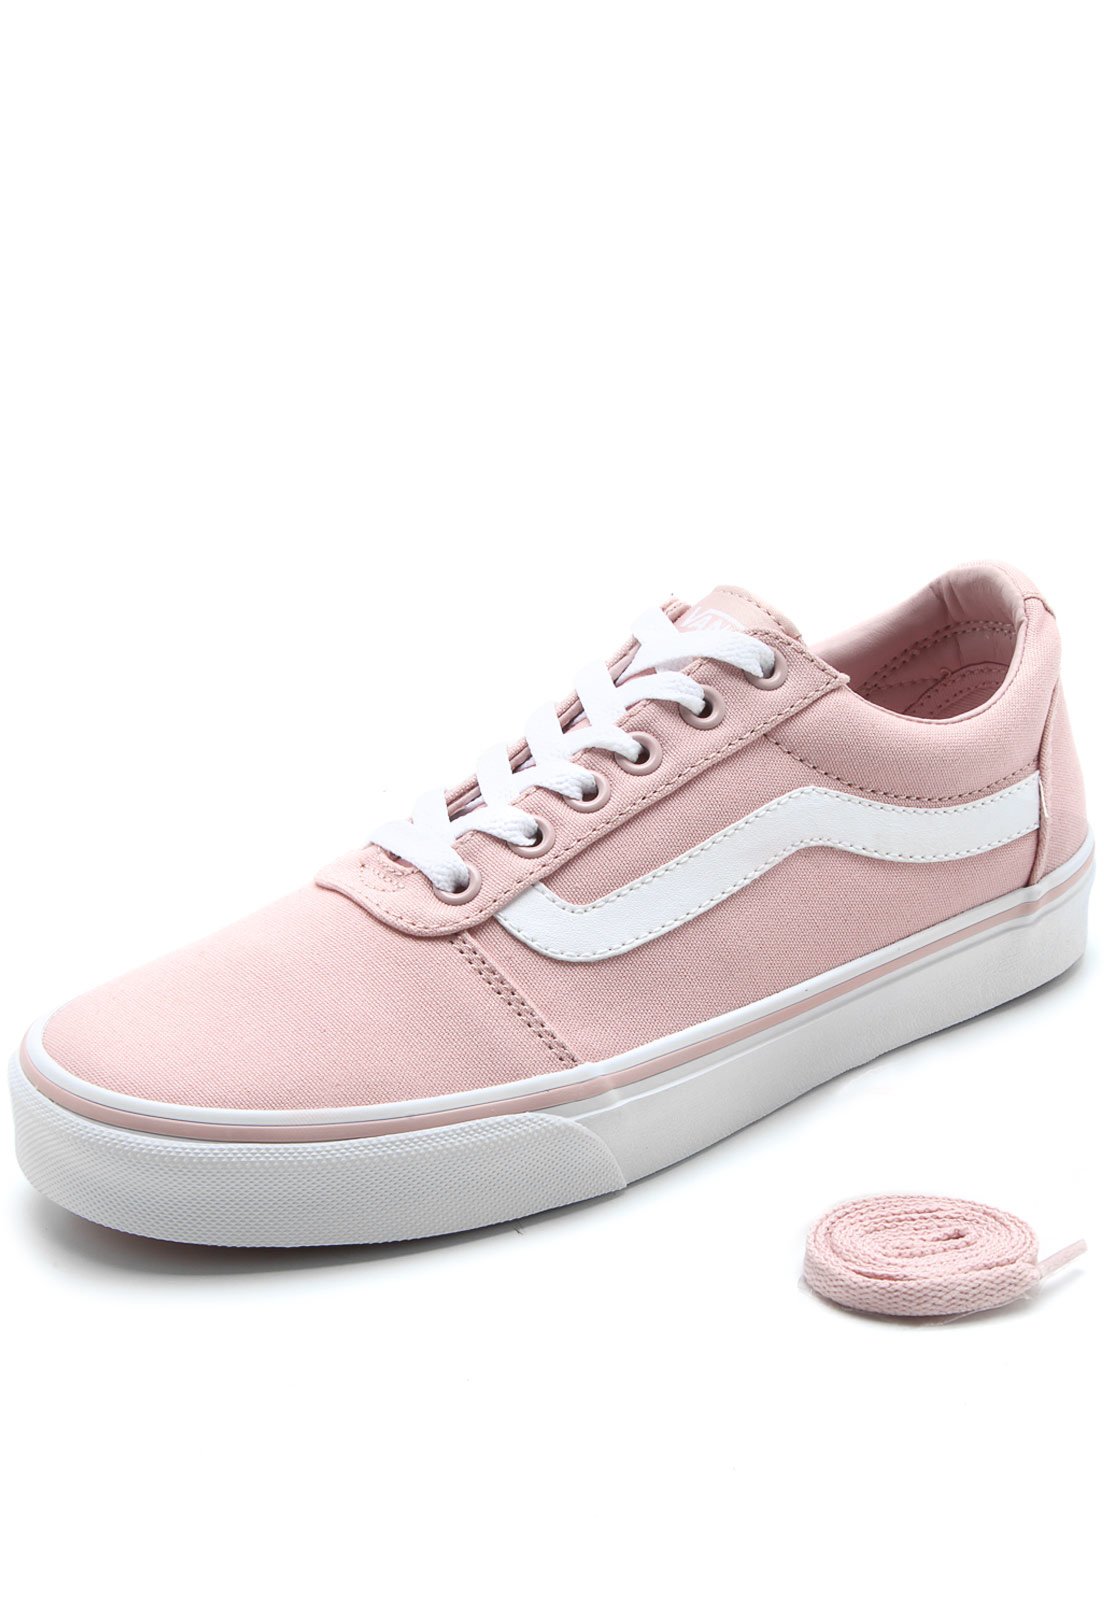 tenis vans rosa e branco